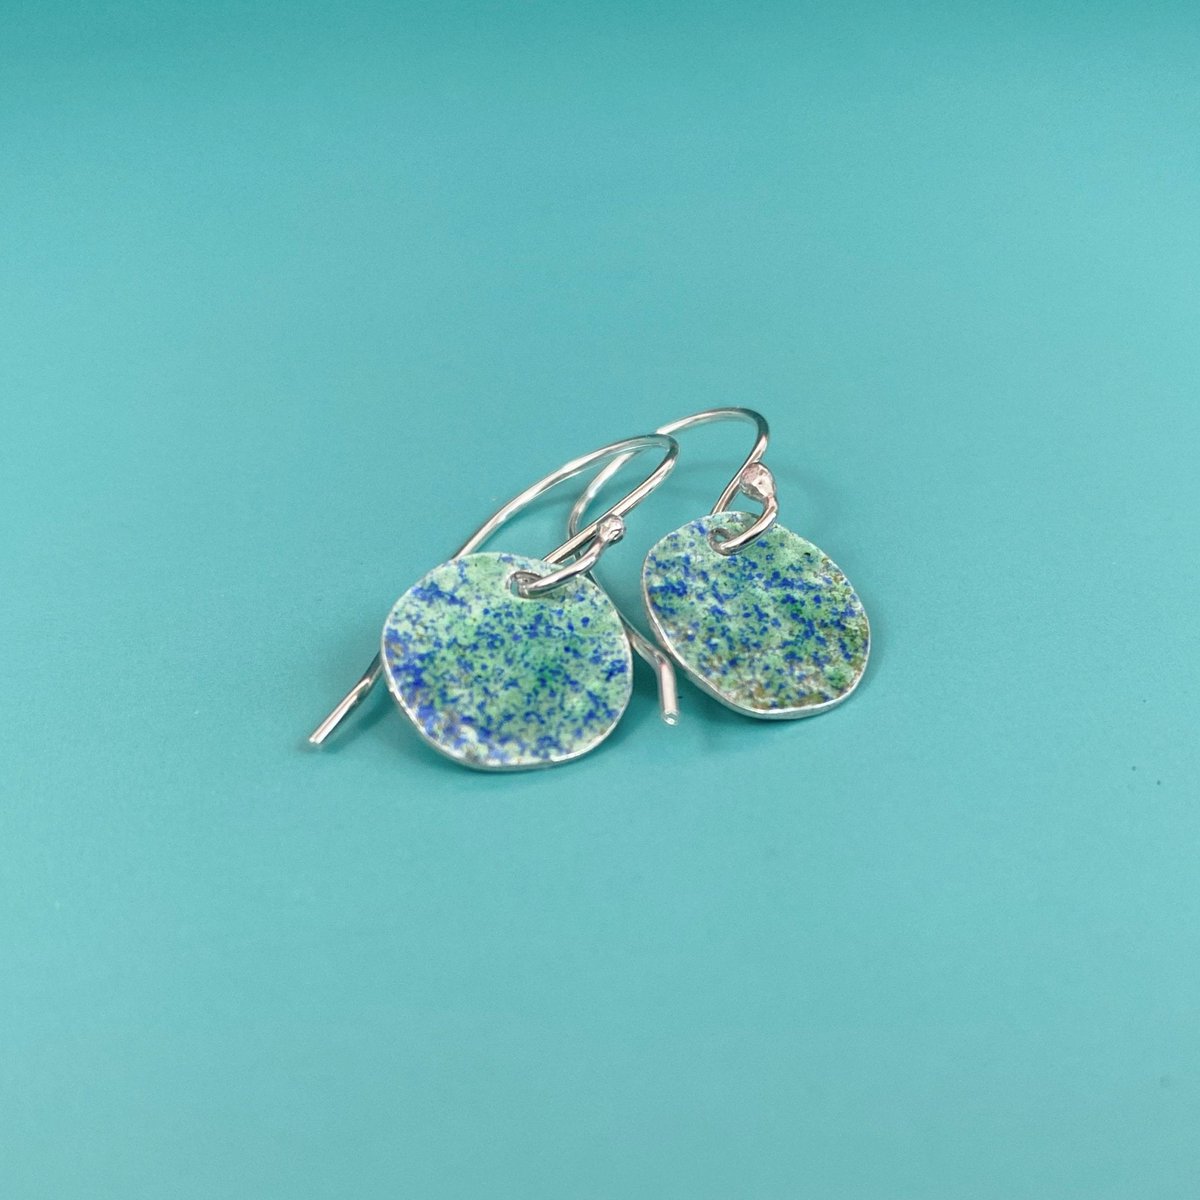 Sea Spirit Earrings tuppu.net/618142a4 #MHHSBD #inbizhour ##UKGiftHour #HandmadeHour #shopsmall #bizbubble #UKHashtags #giftideas #DiscEarrings